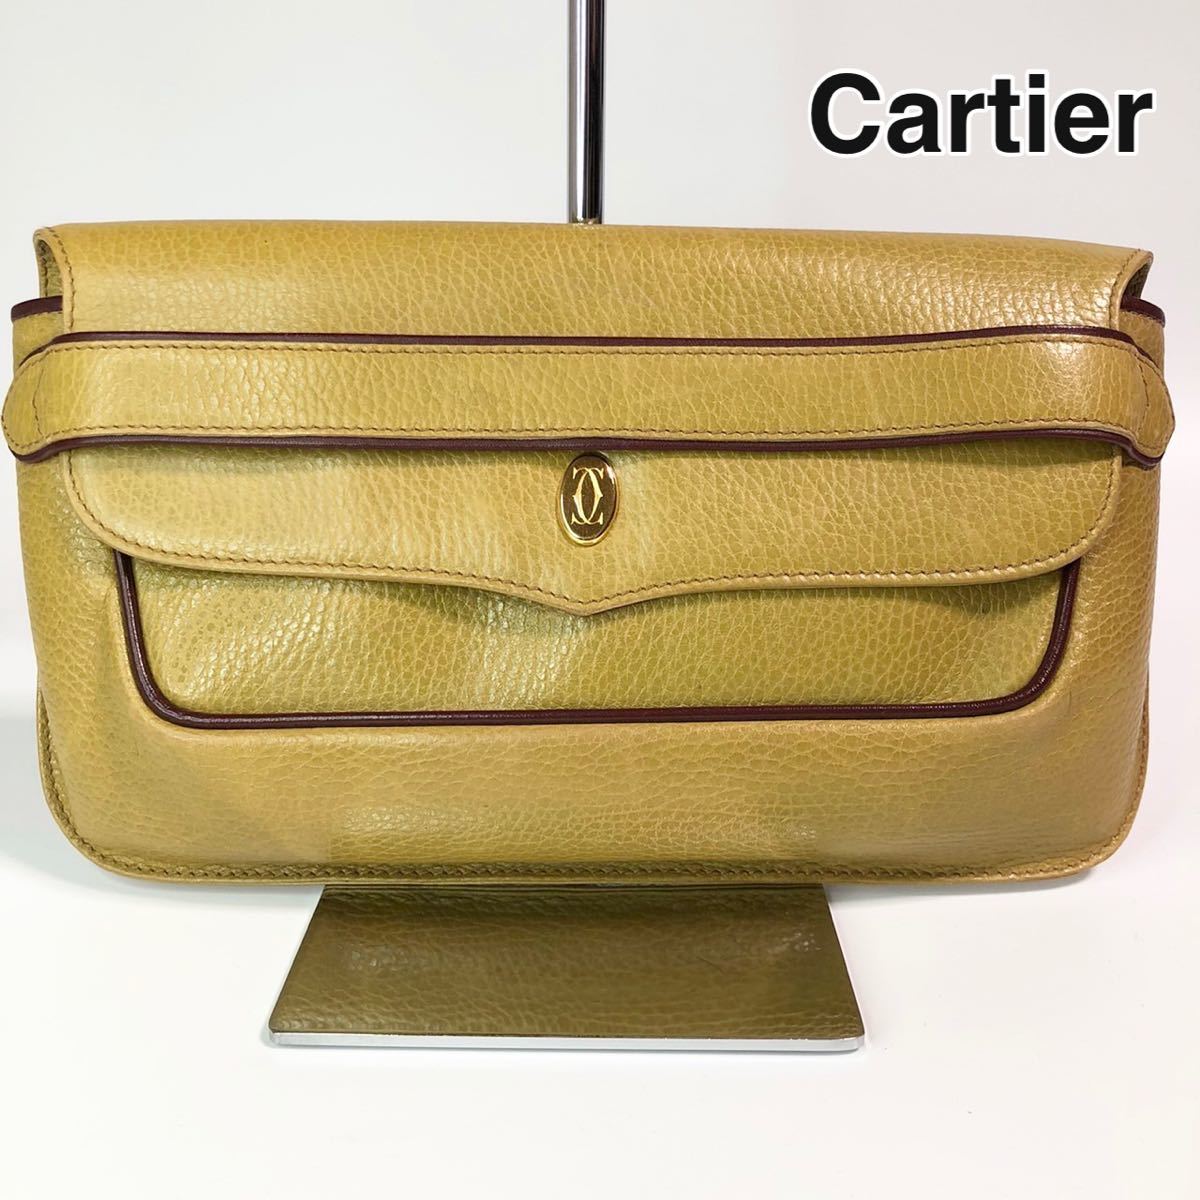 Cartier カルティエ マストライン レザー クラッチバッグ 黄色 セカンドバッグ